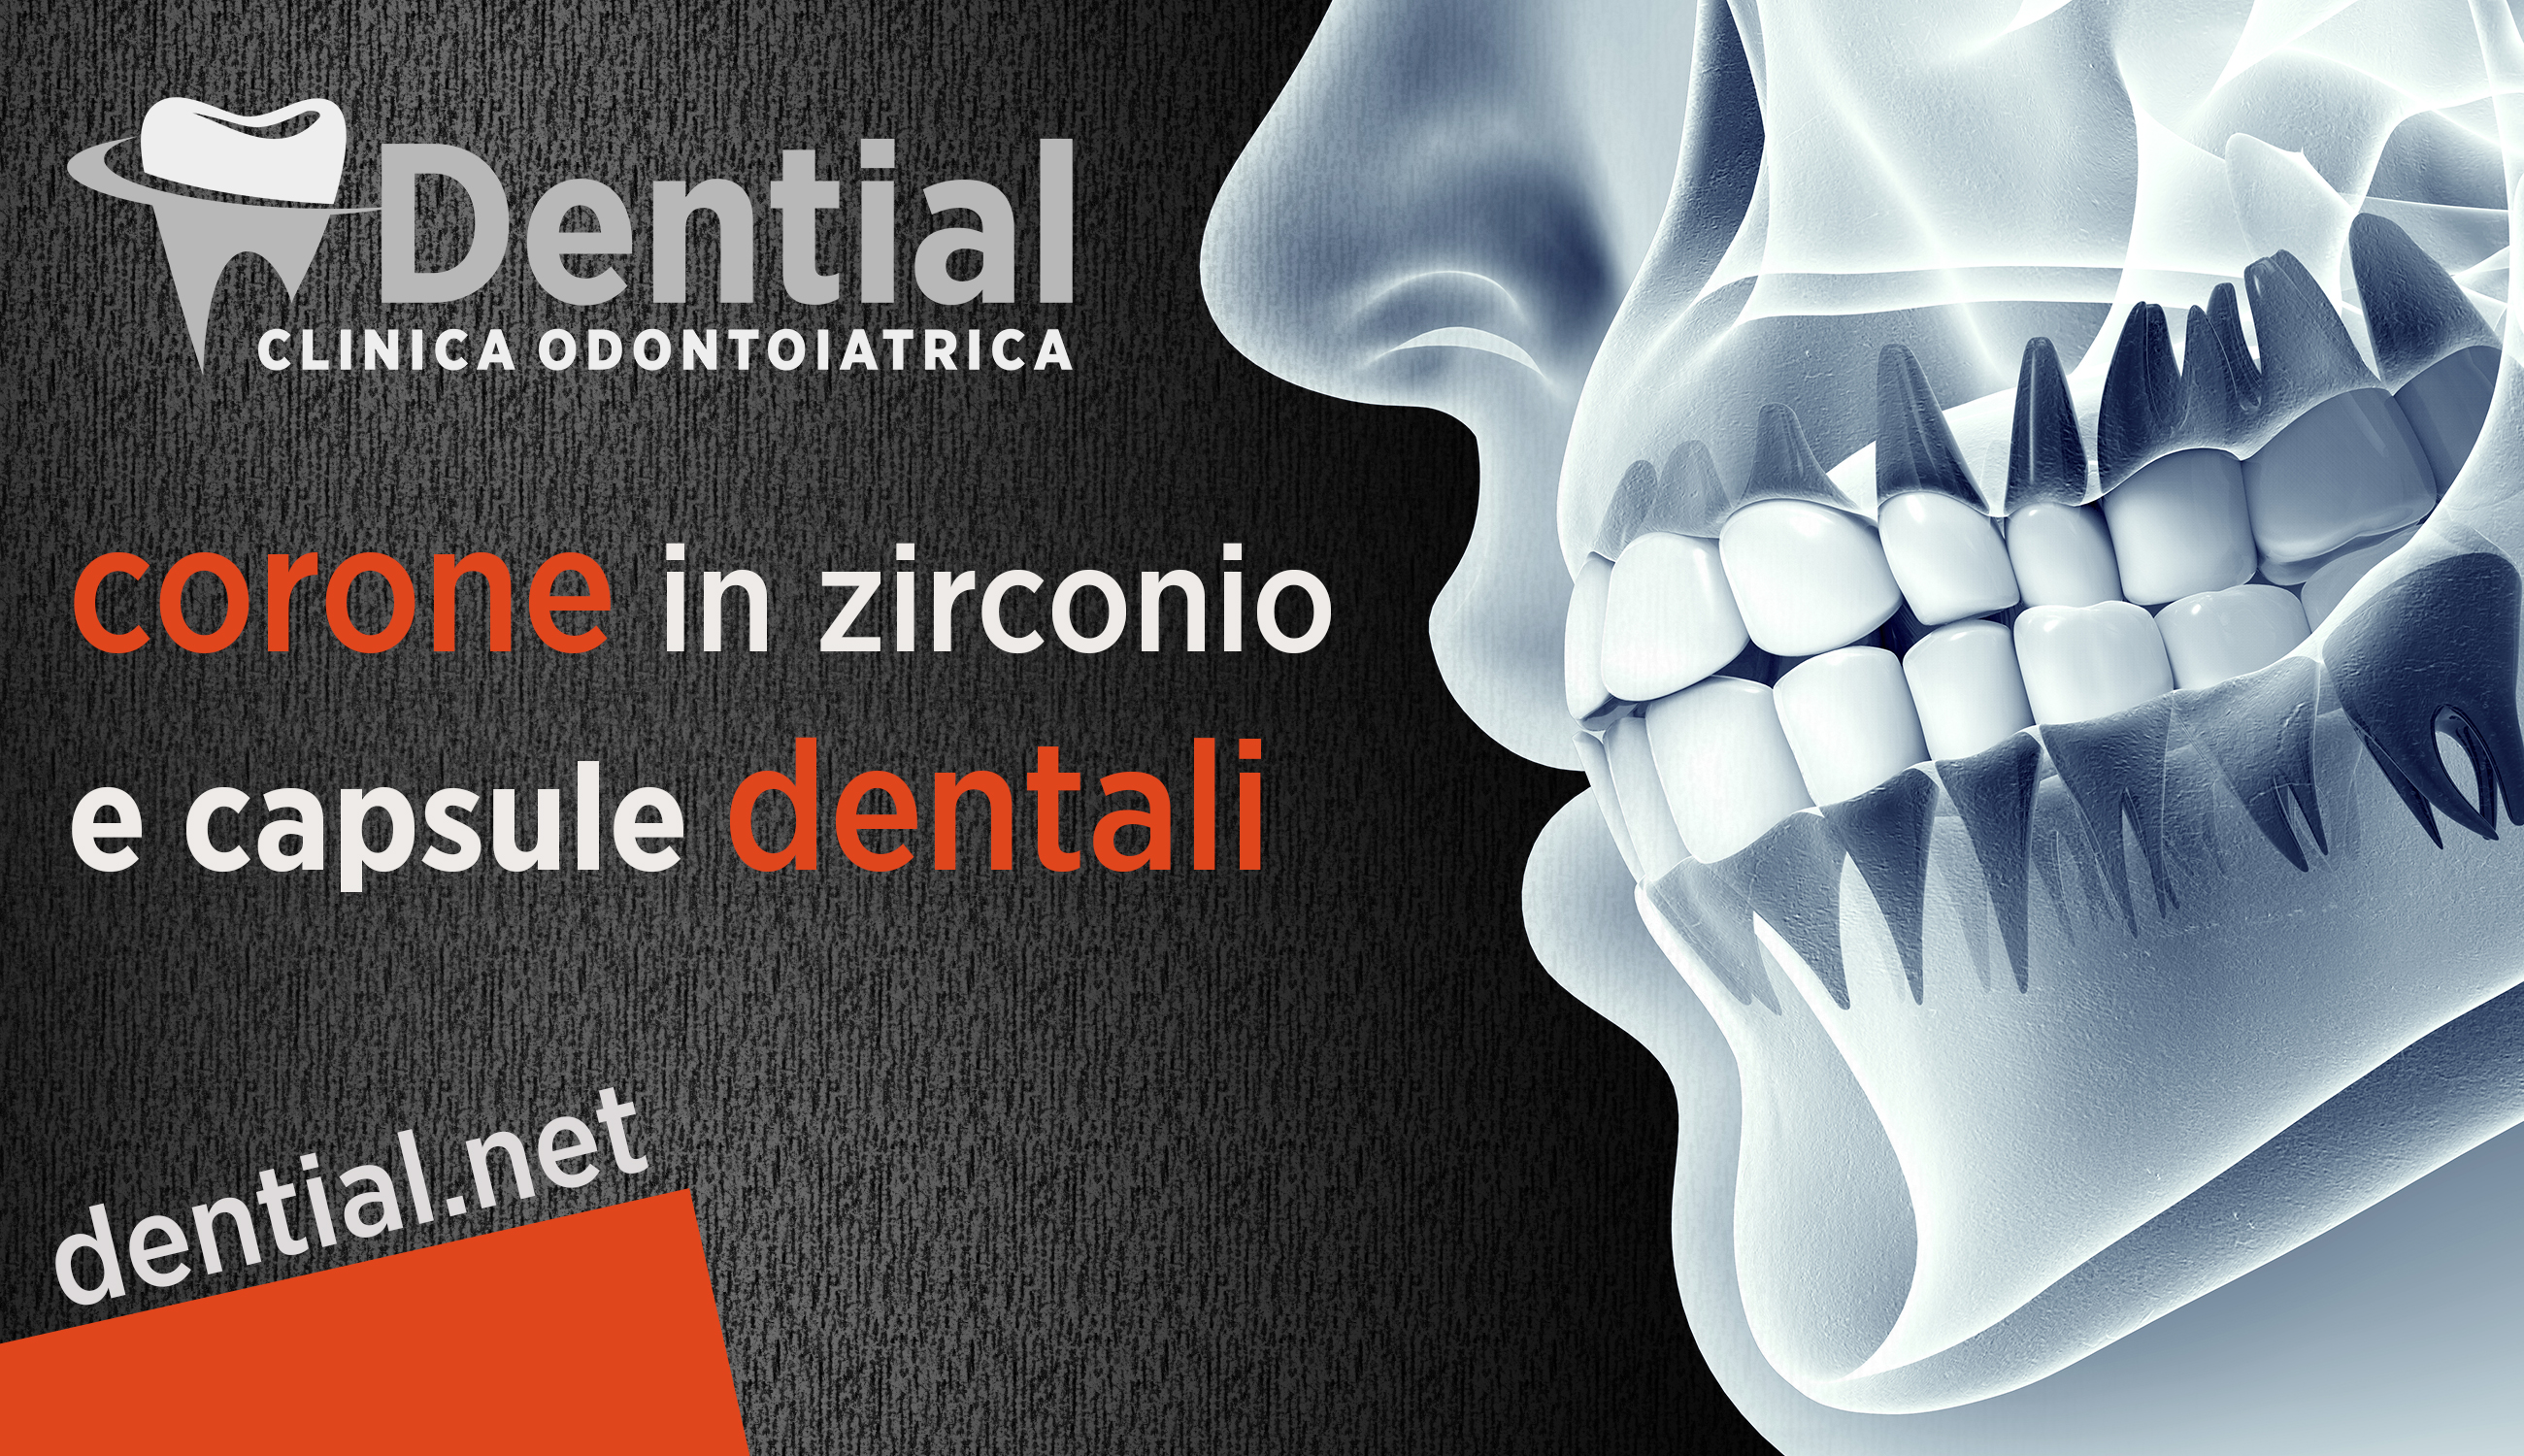 Turismo dentale Albania prezzi Dential clinica odontoiatrica